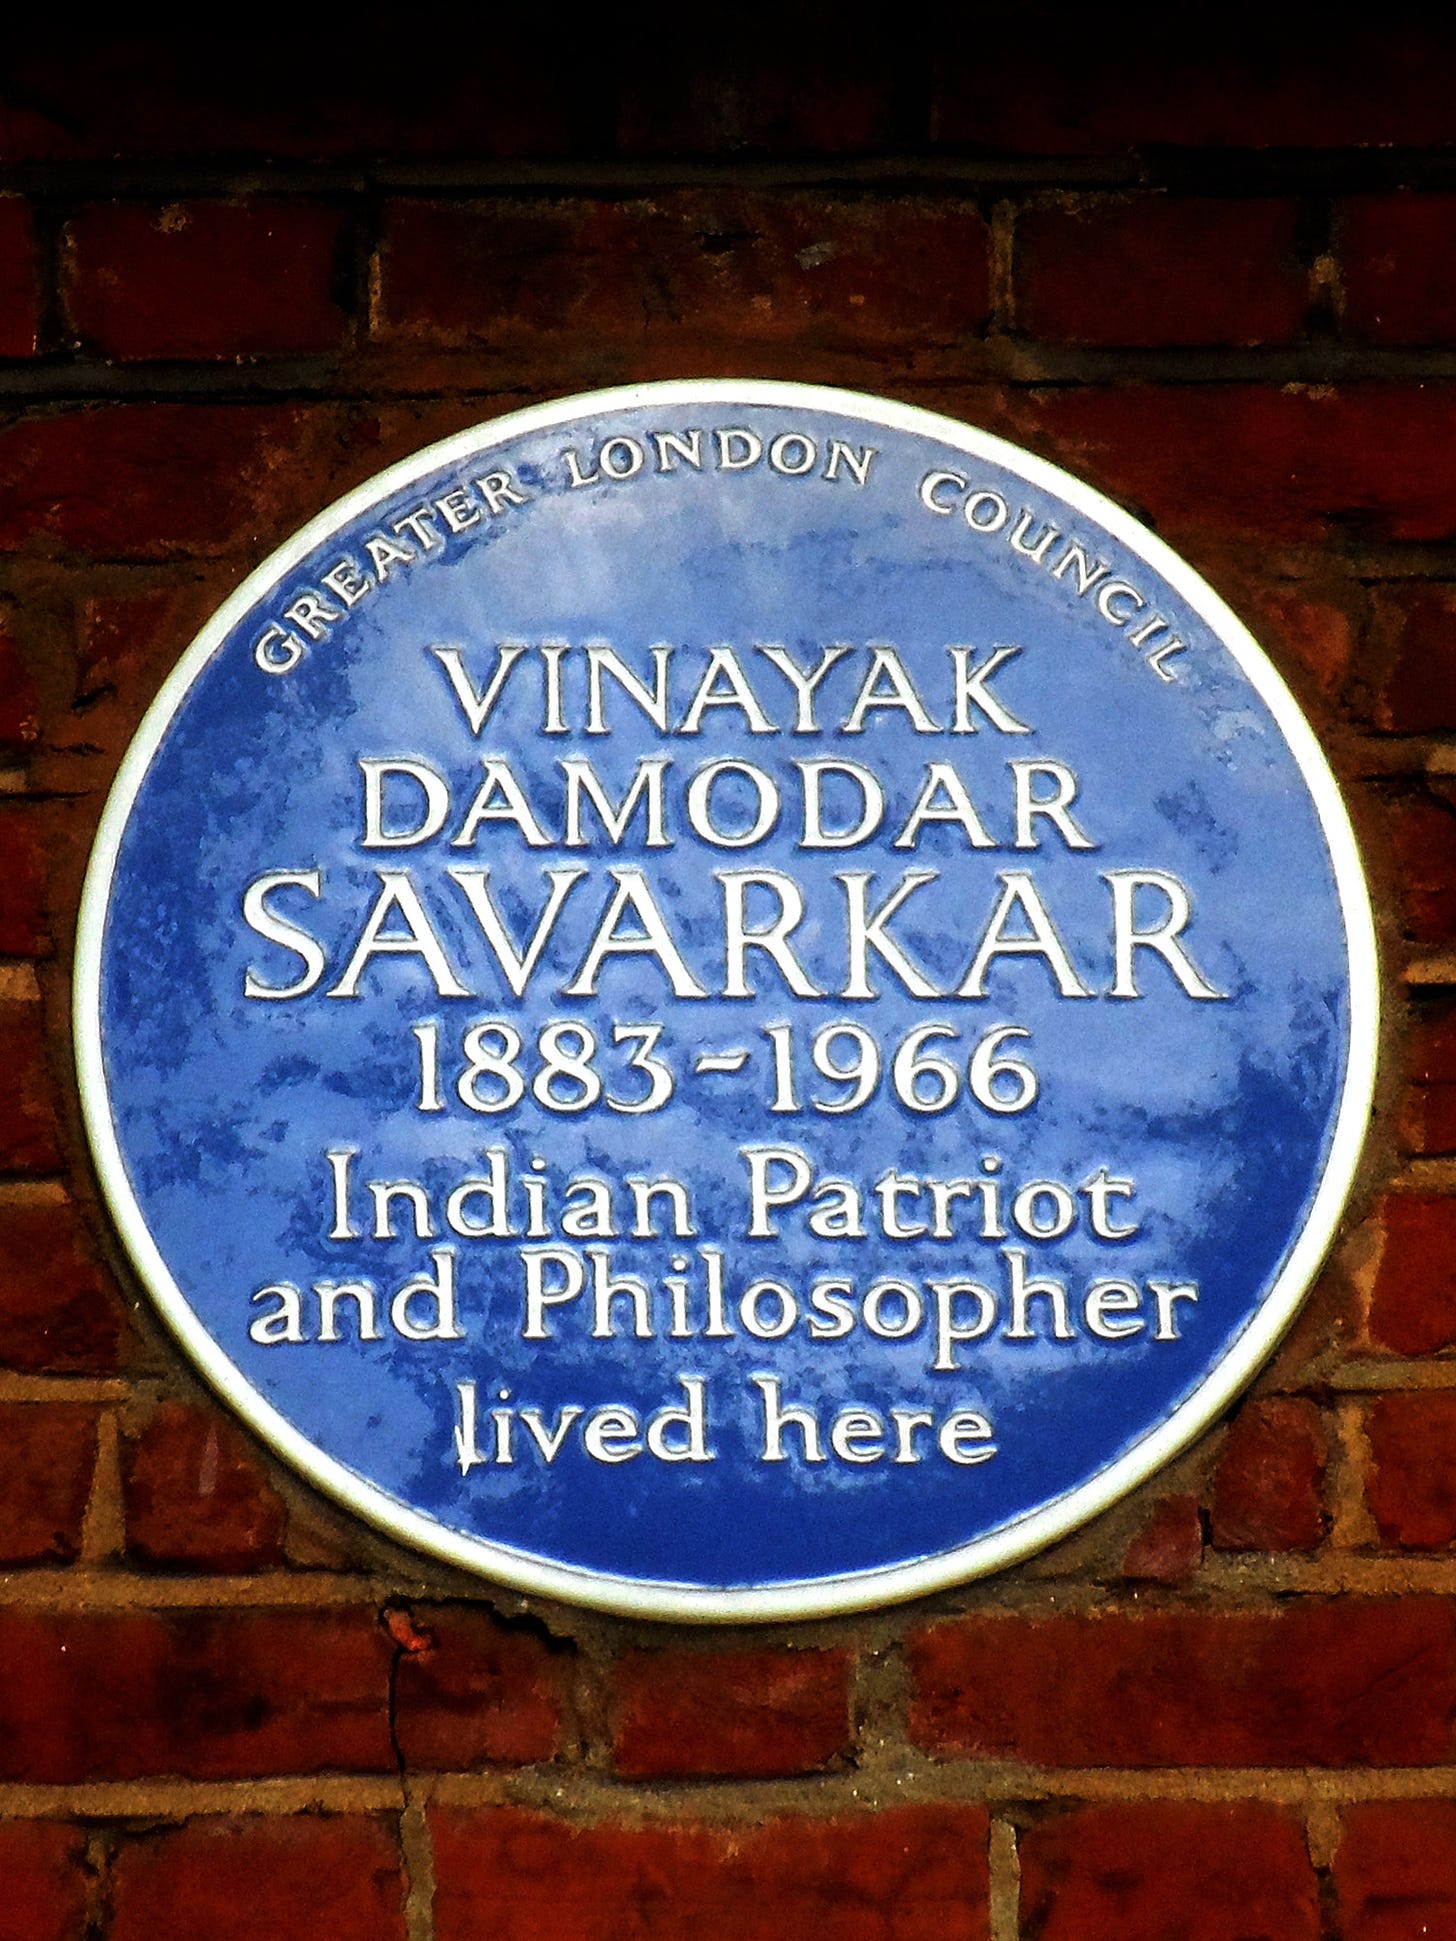 File:VINAYAK DAMODAR SAVARKAR's residence (English Heritage blue plaque).jpg  - Wikimedia Commons